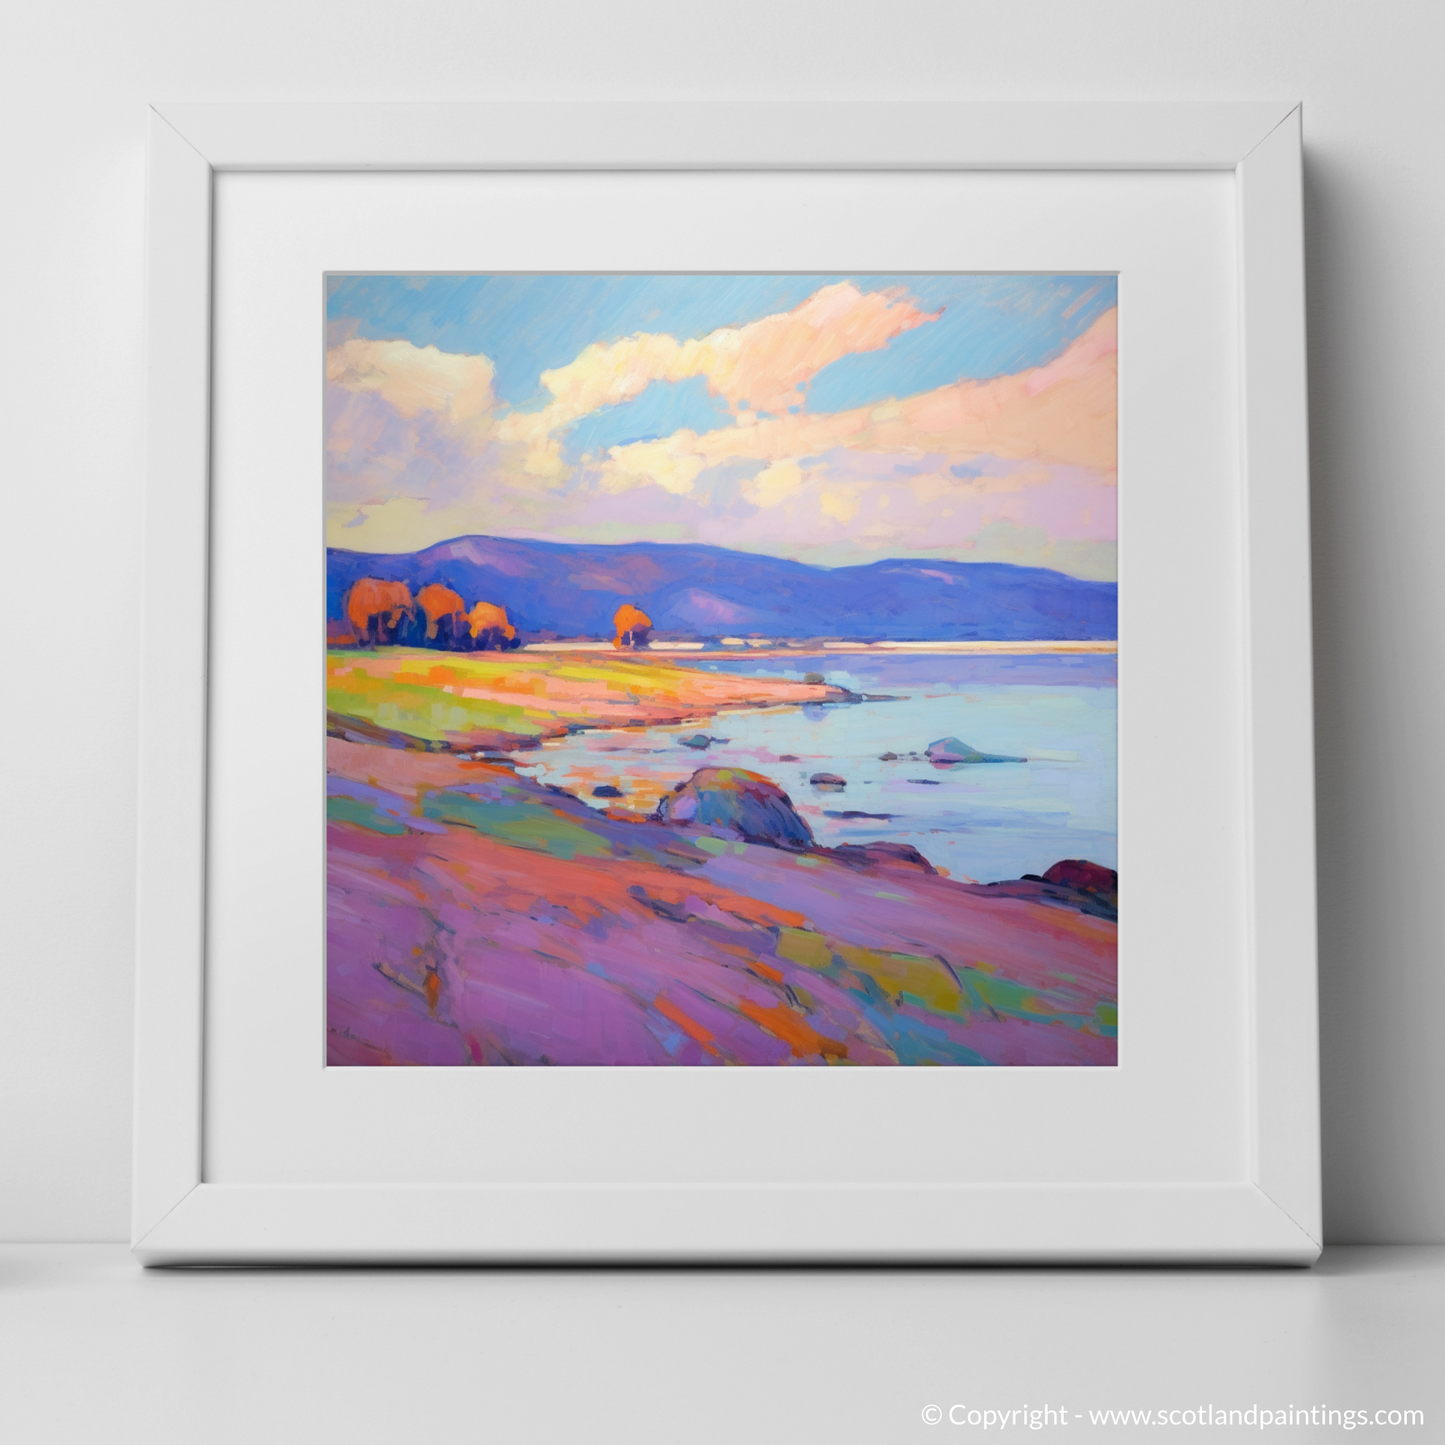 Longniddry Beach Serenity: An Impressionist Homage to Scottish Shores